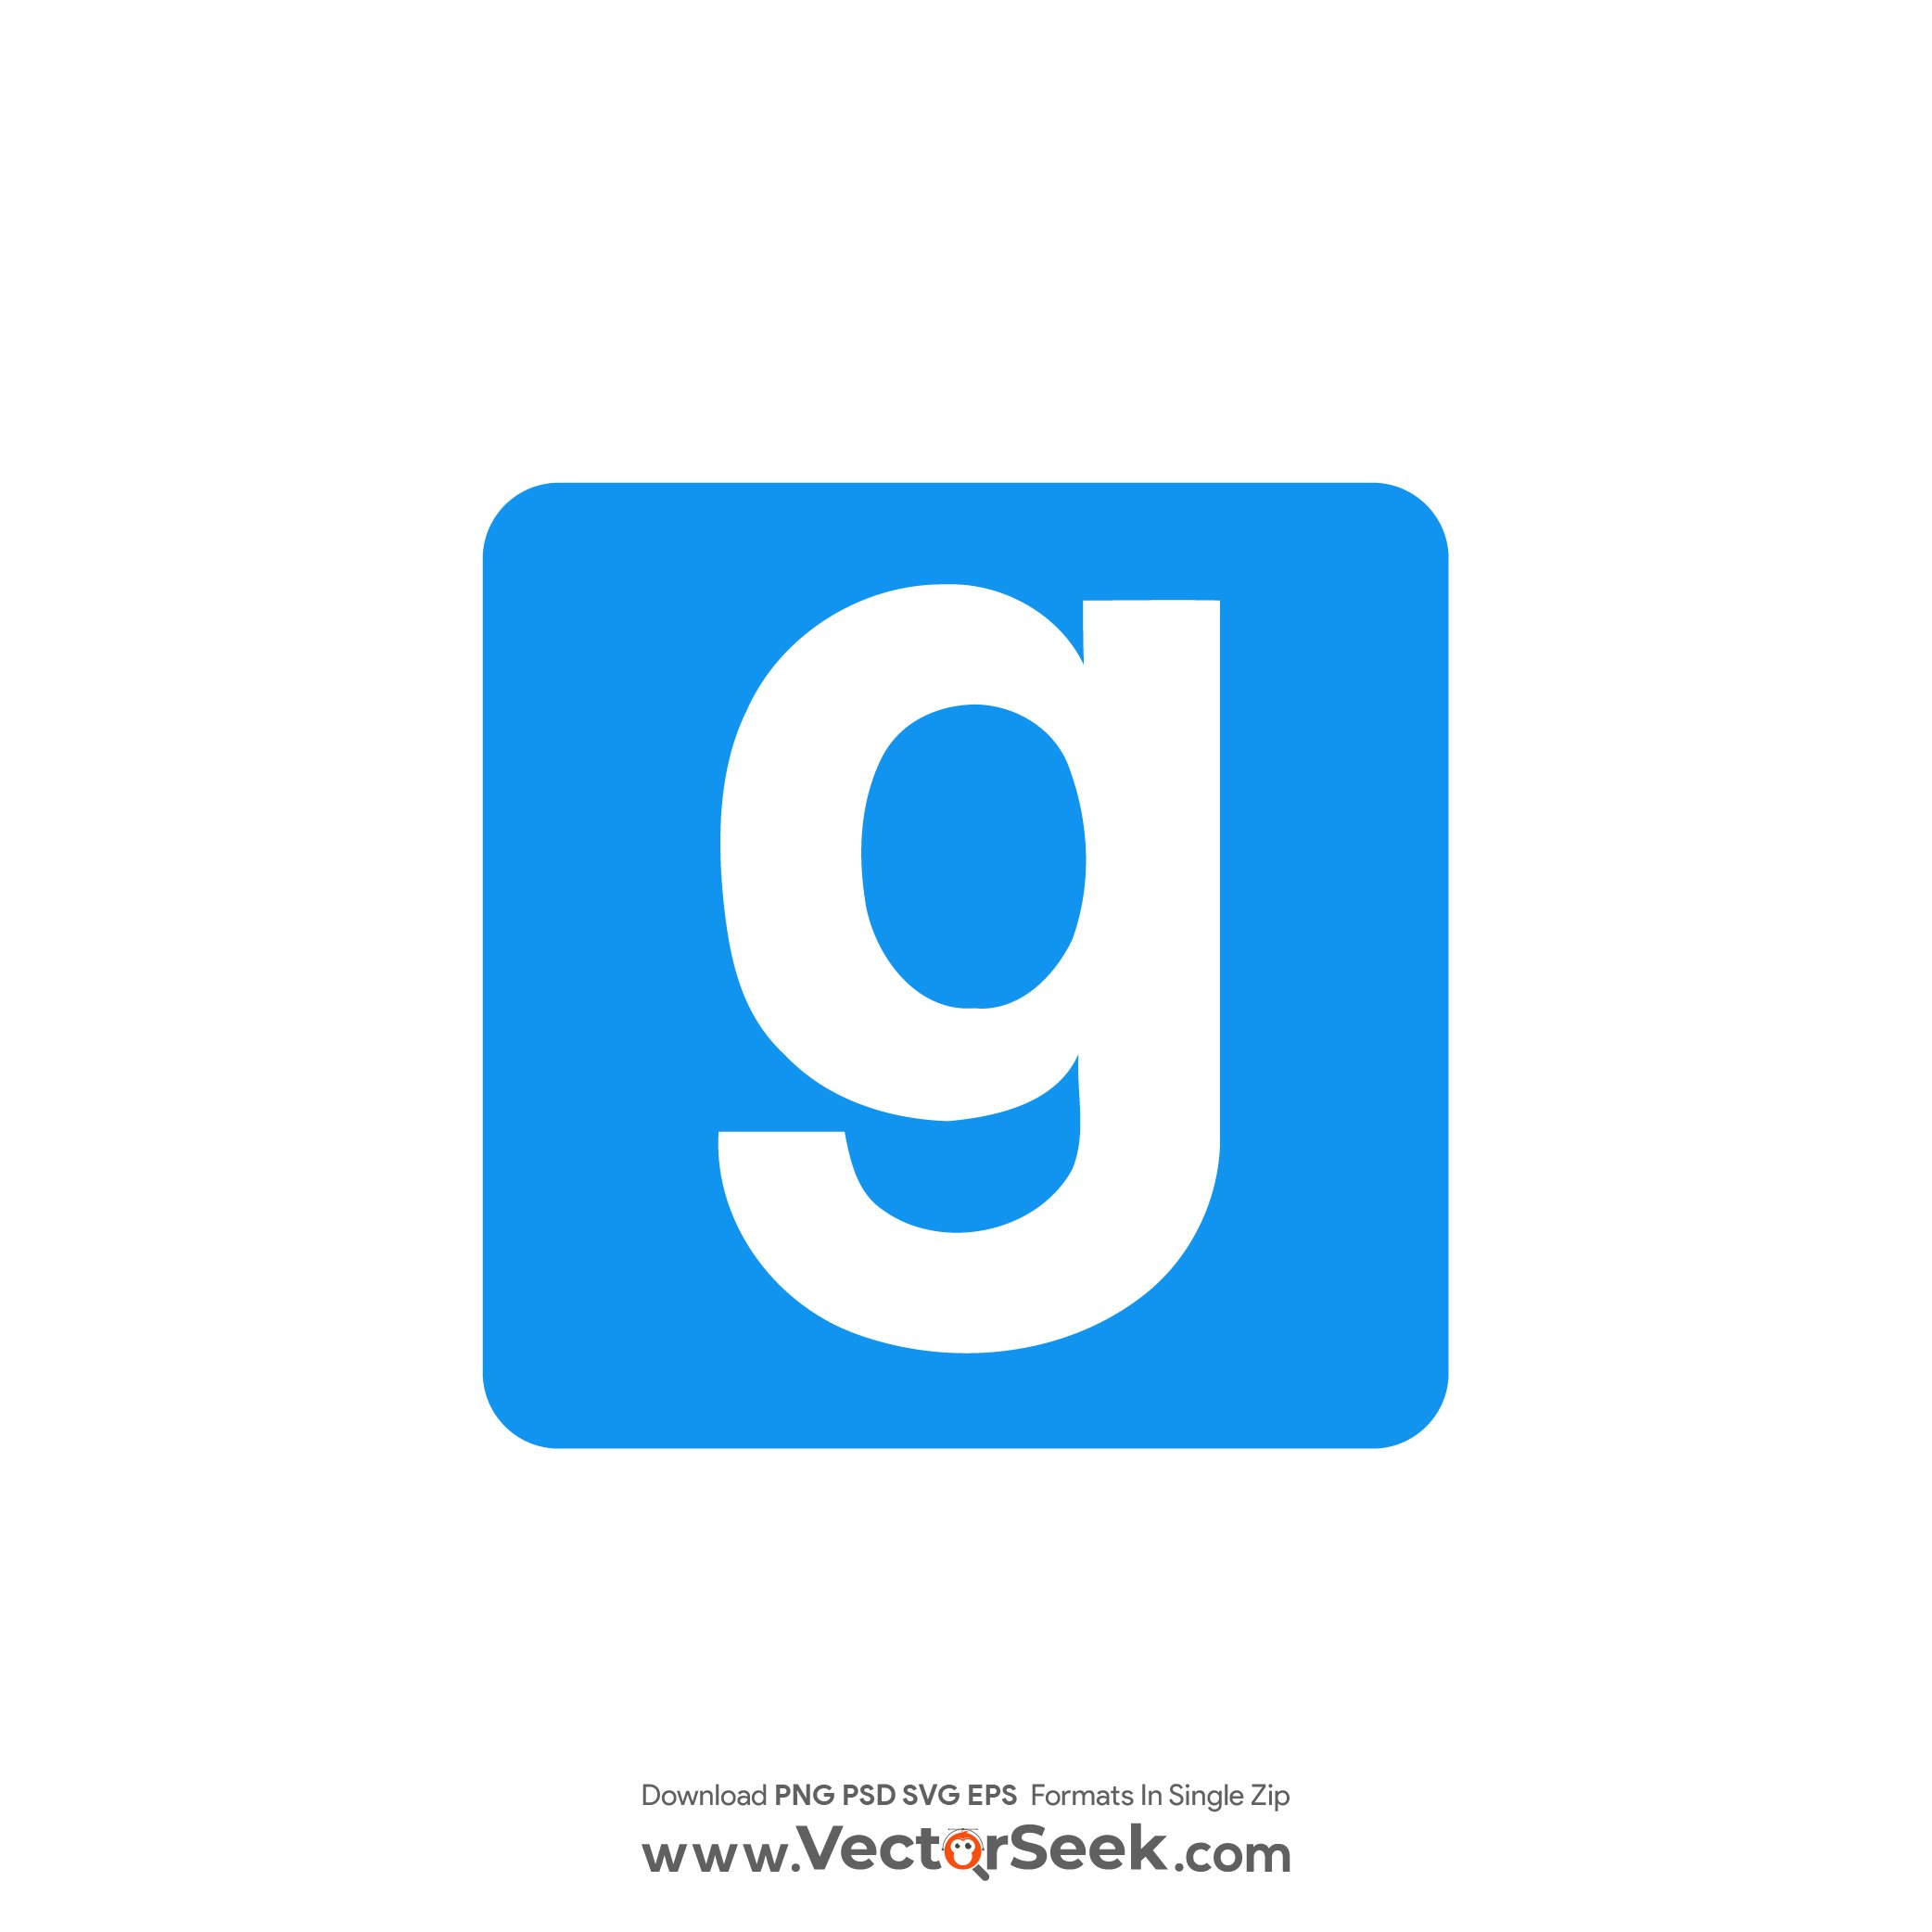 Gmod wiki. Garry's Mod лого. Гаррис мод логотип. Ярлык Гаррис мод. Надпись Garry's Mod.